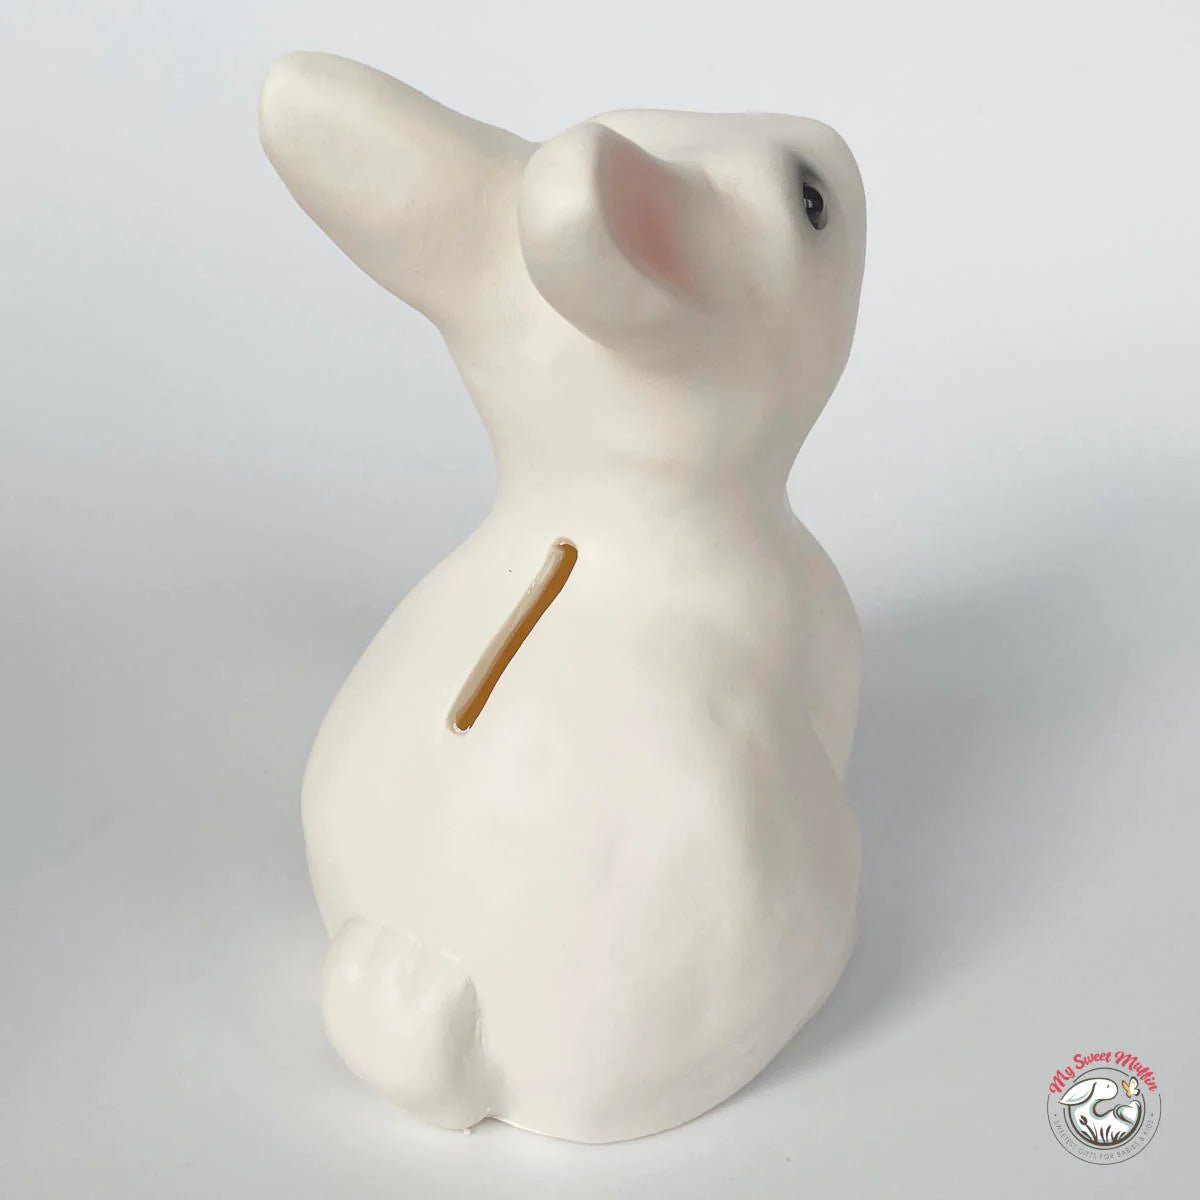 Rabbit Savings Bank by Egmont - Maude Kids Decor